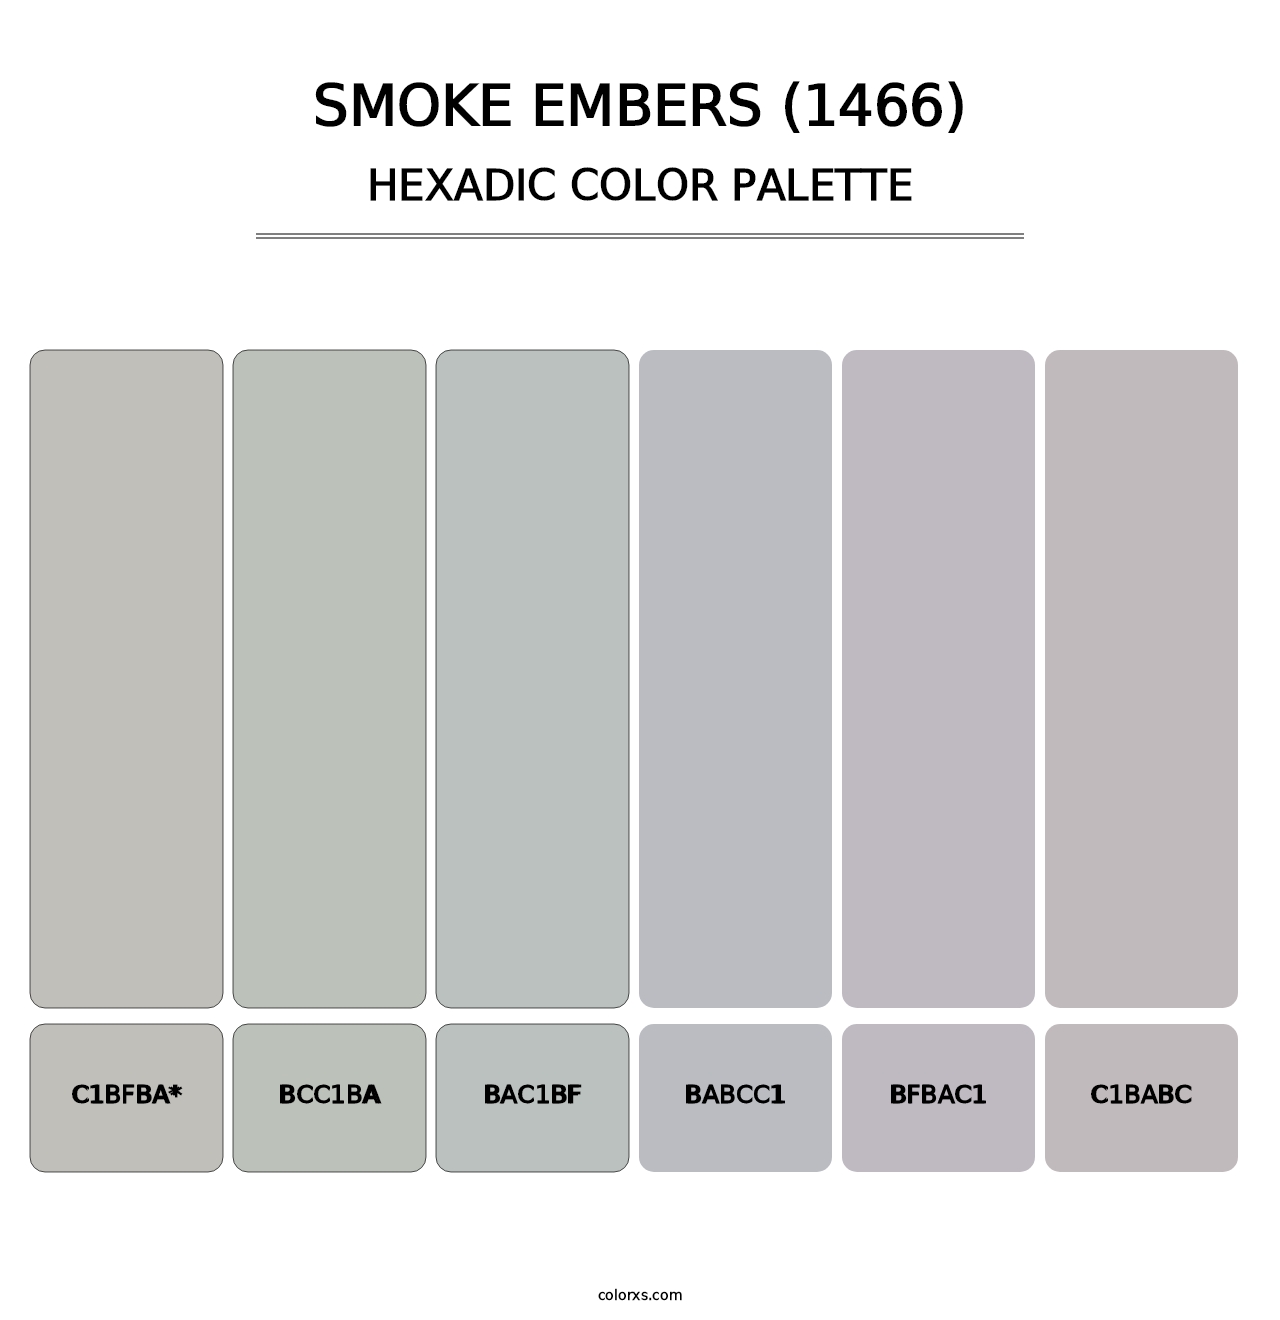 Smoke Embers (1466) - Hexadic Color Palette